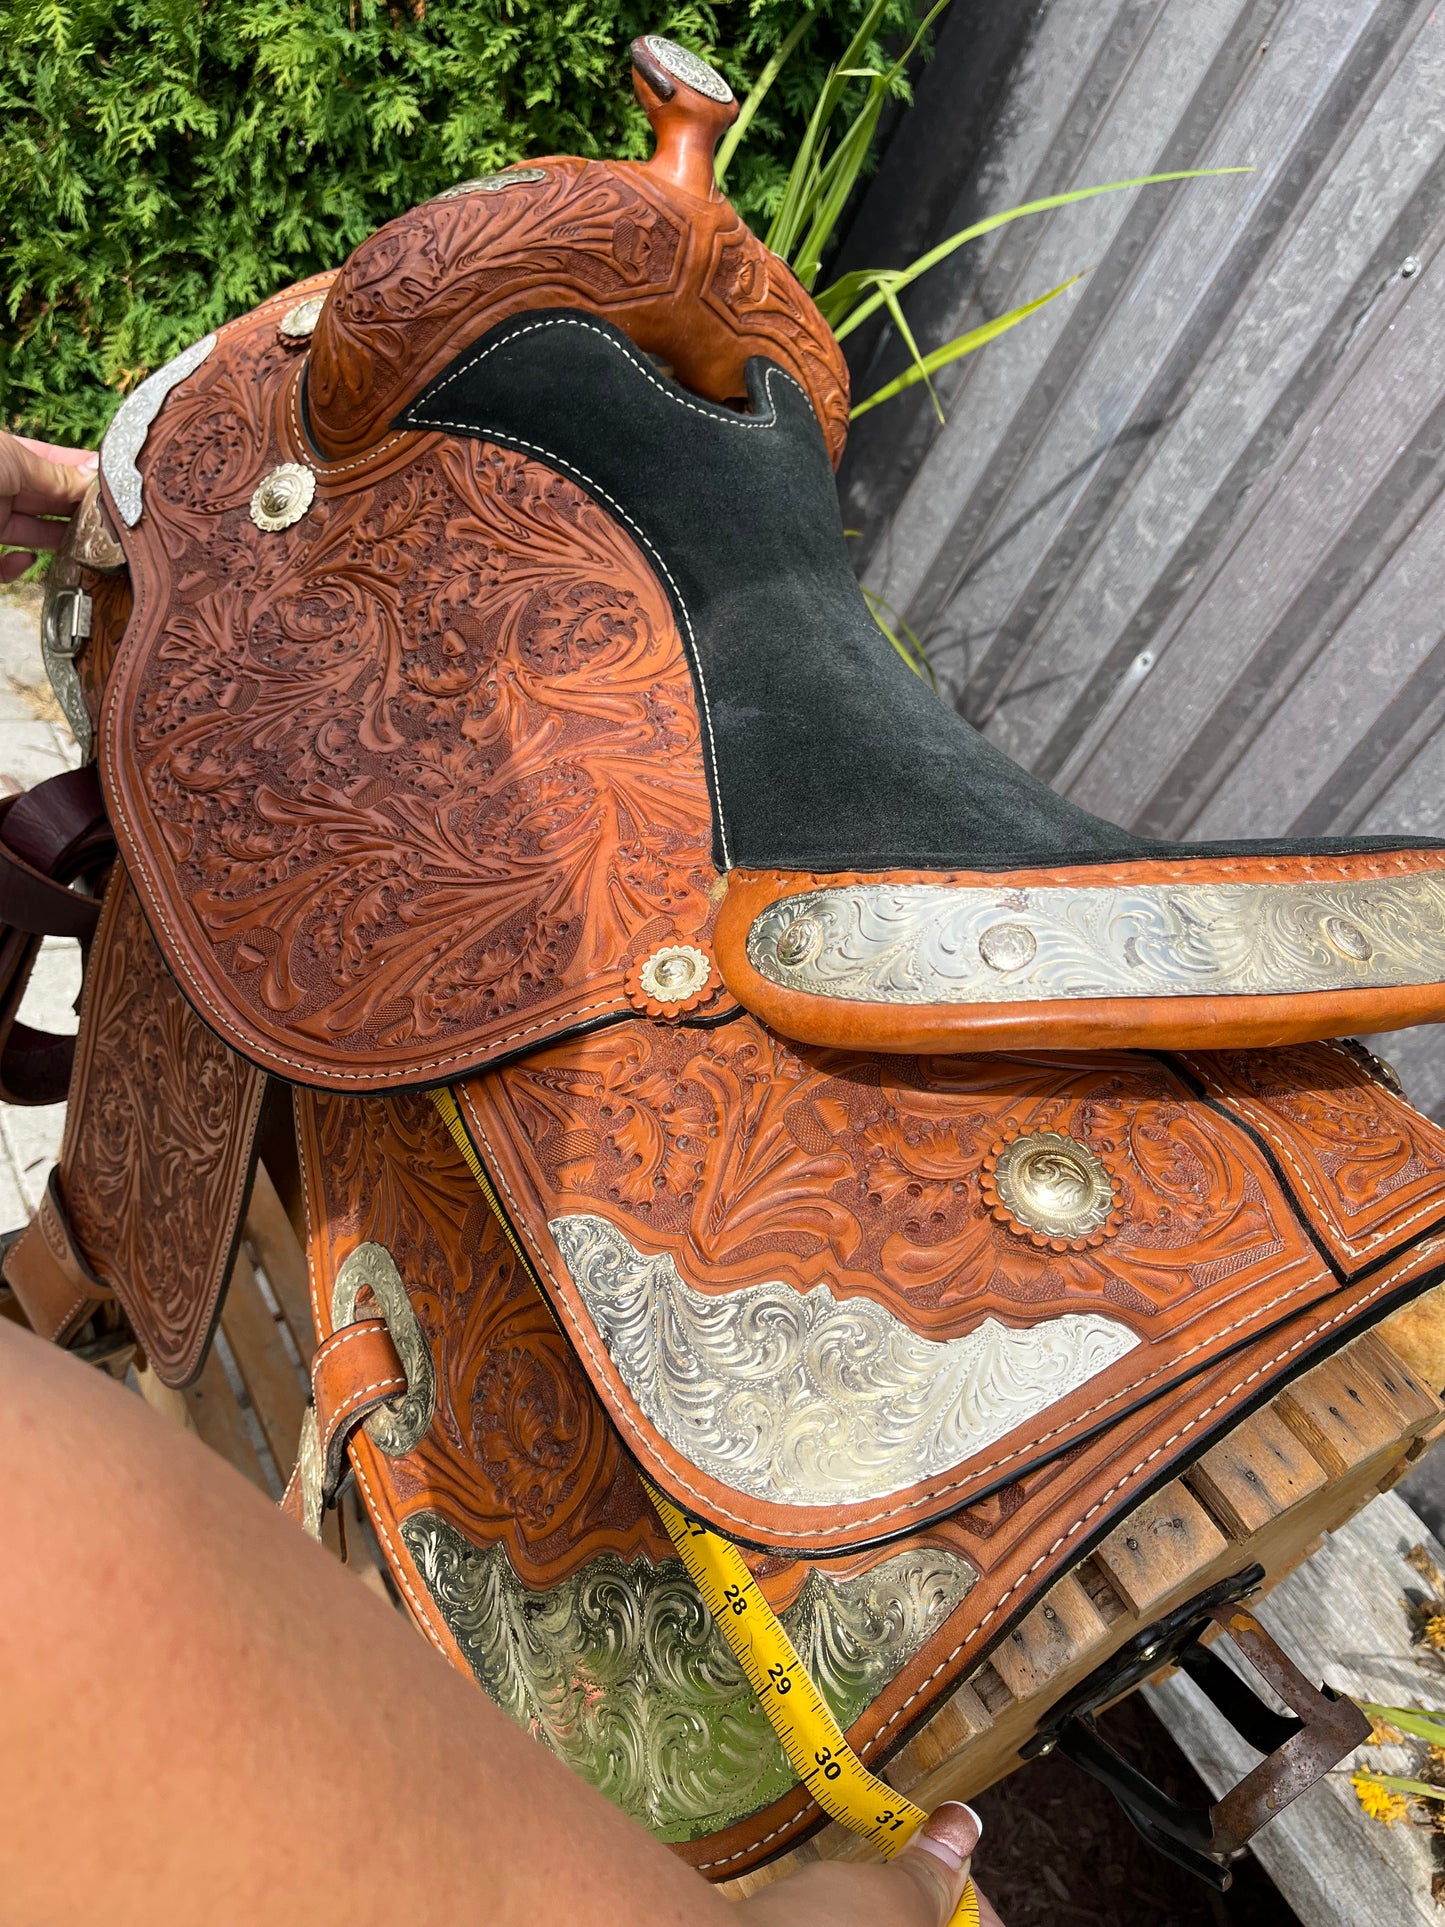 18” Corriente show saddle